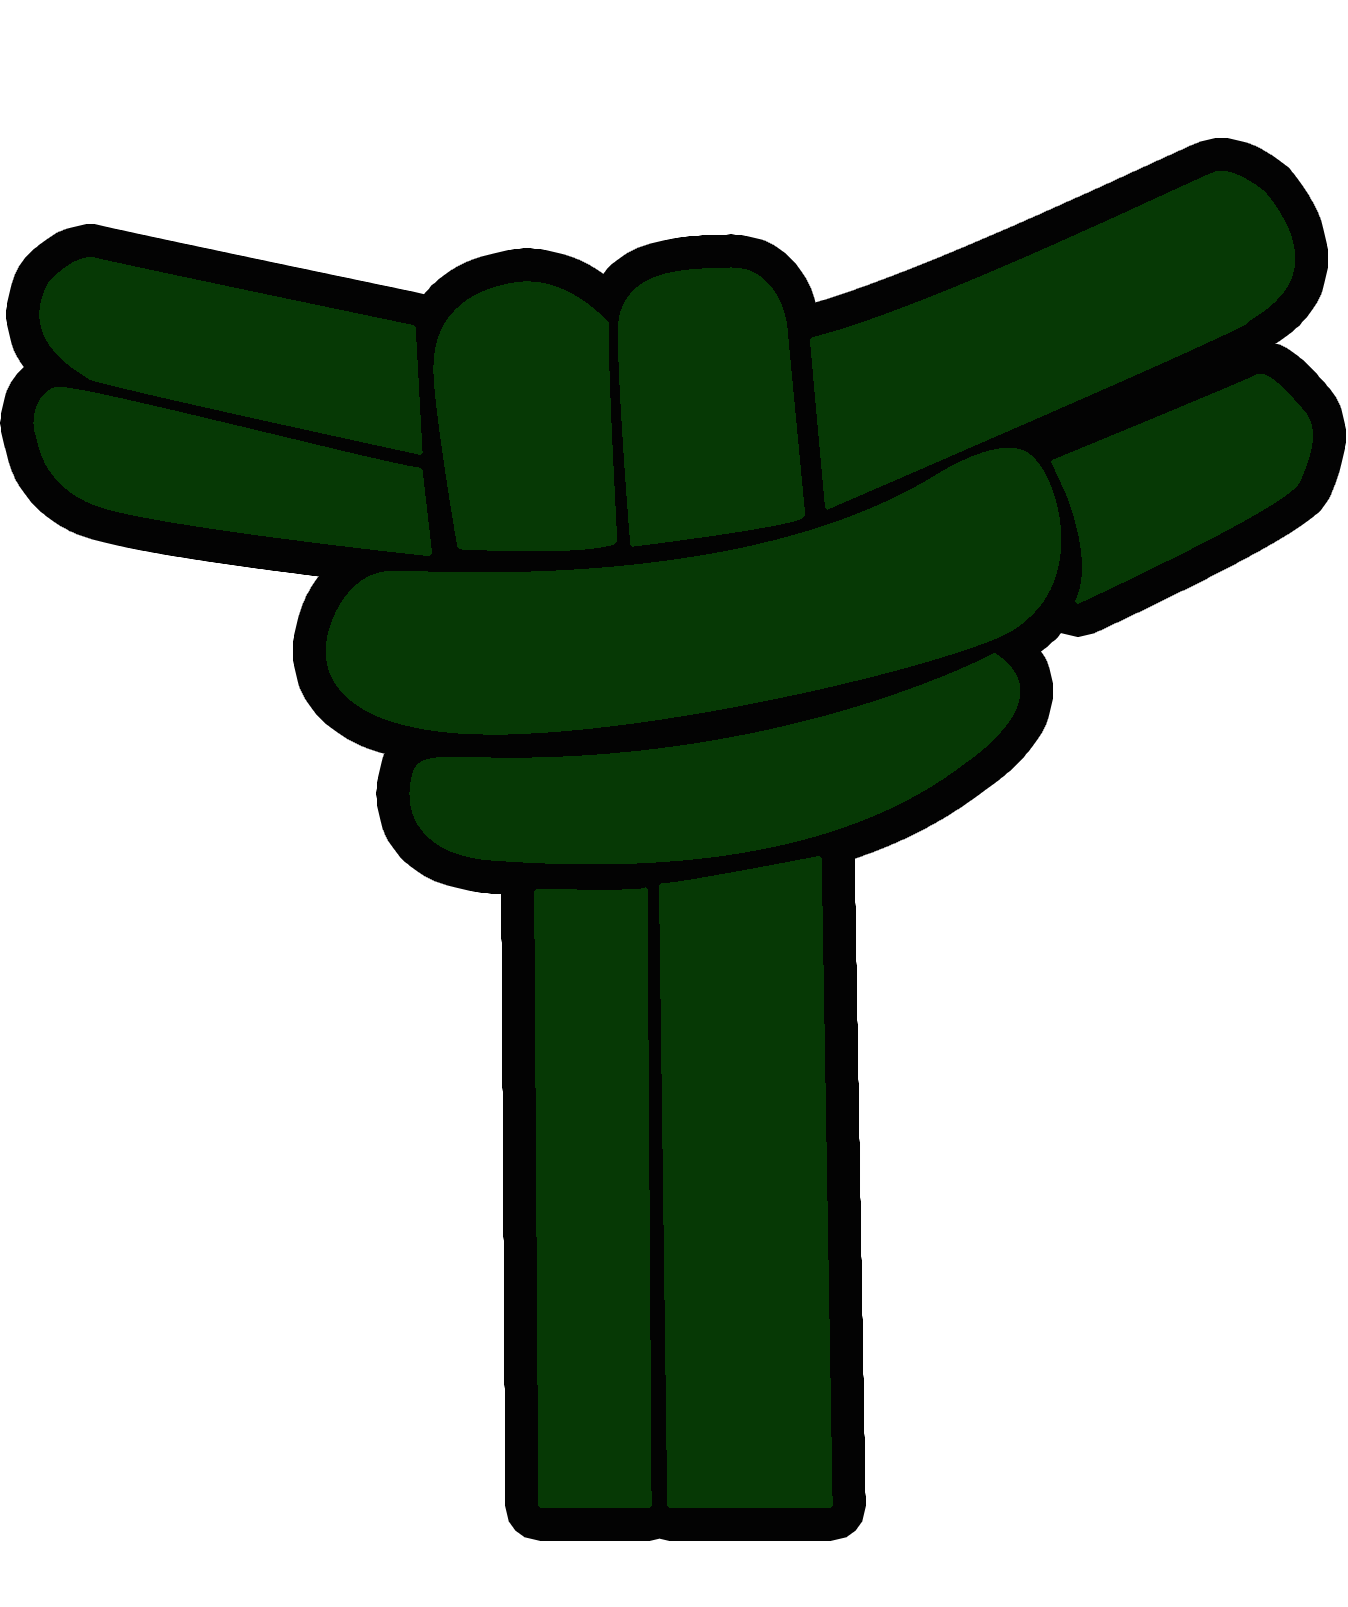 File:Corda Verde - Capoeira.png - Wikipedia